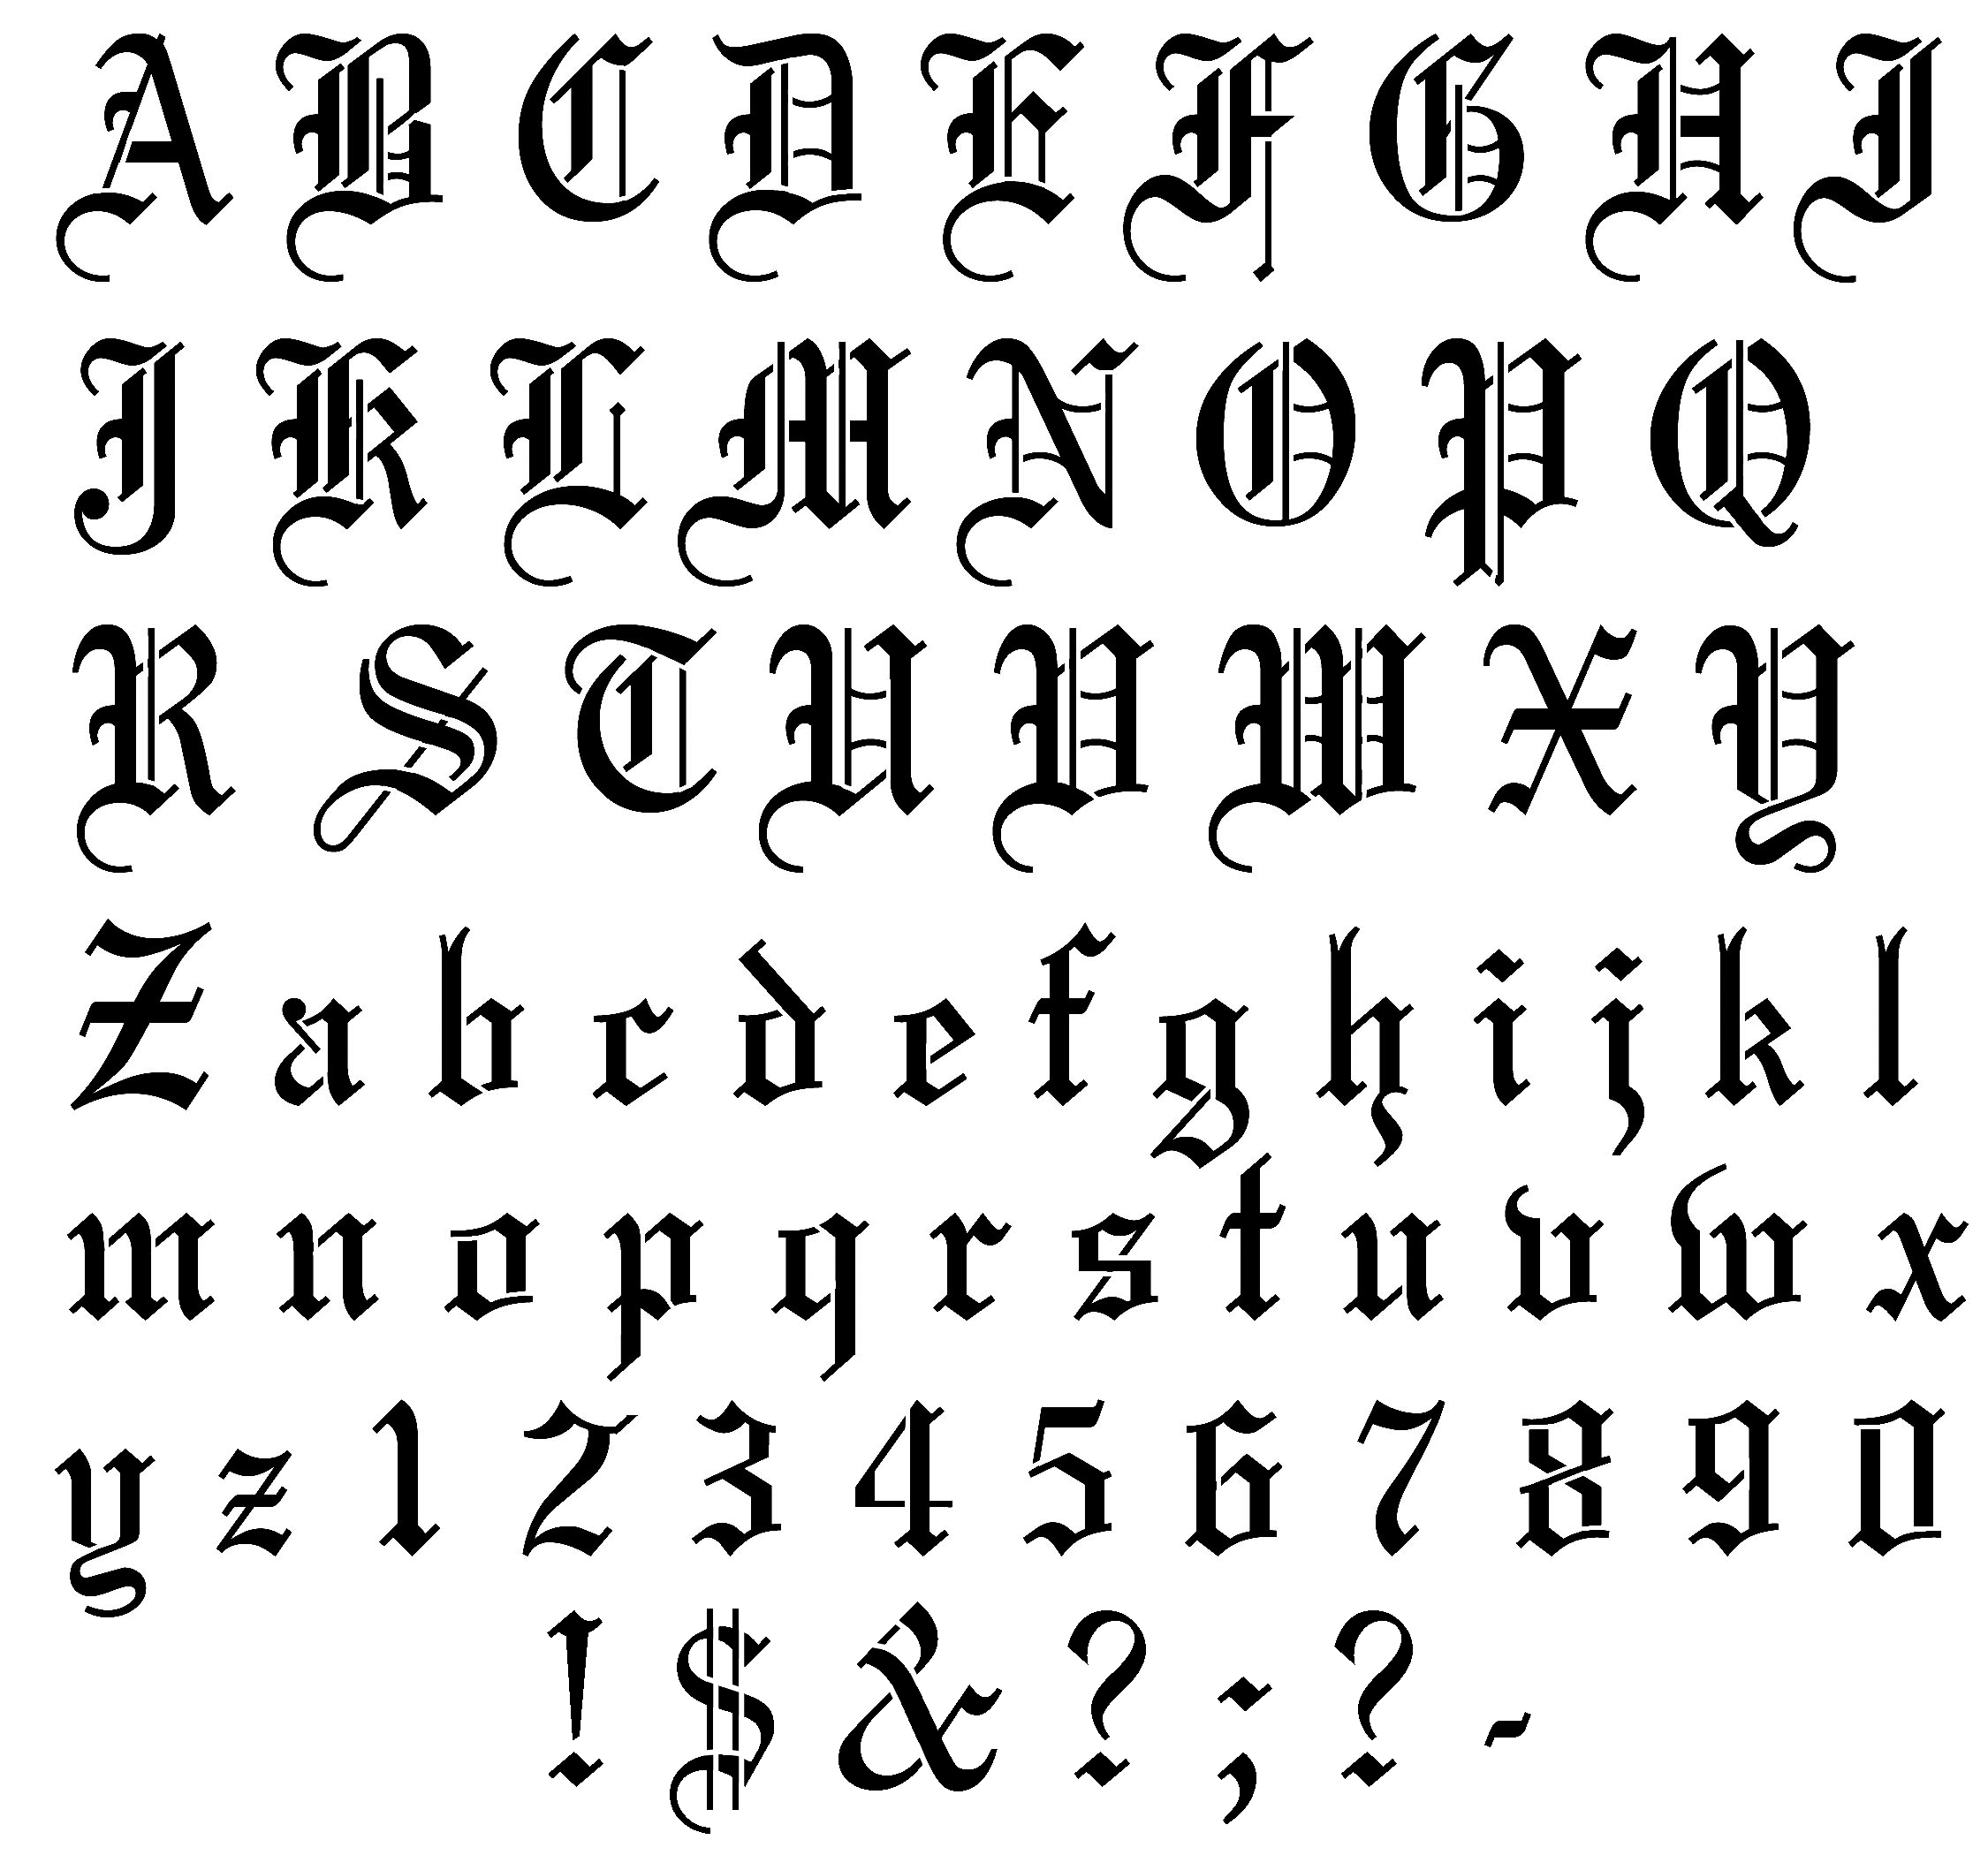 Best Printable Old English Alphabet A-Z_81629